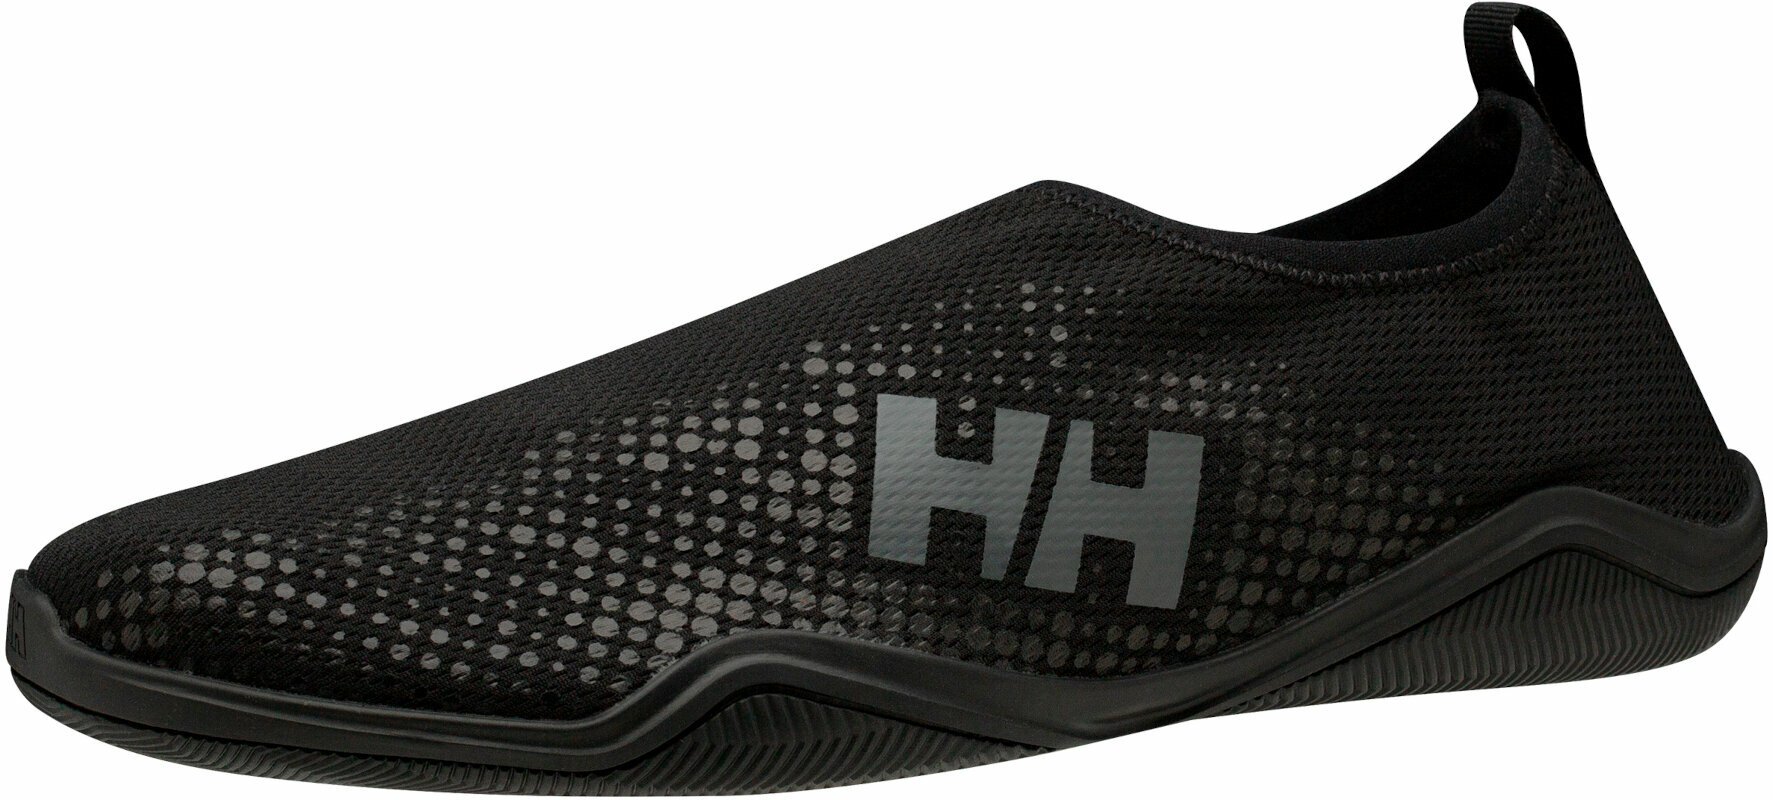 Buty żeglarskie Helly Hansen Men's Crest Watermoc Black/Charcoal 46